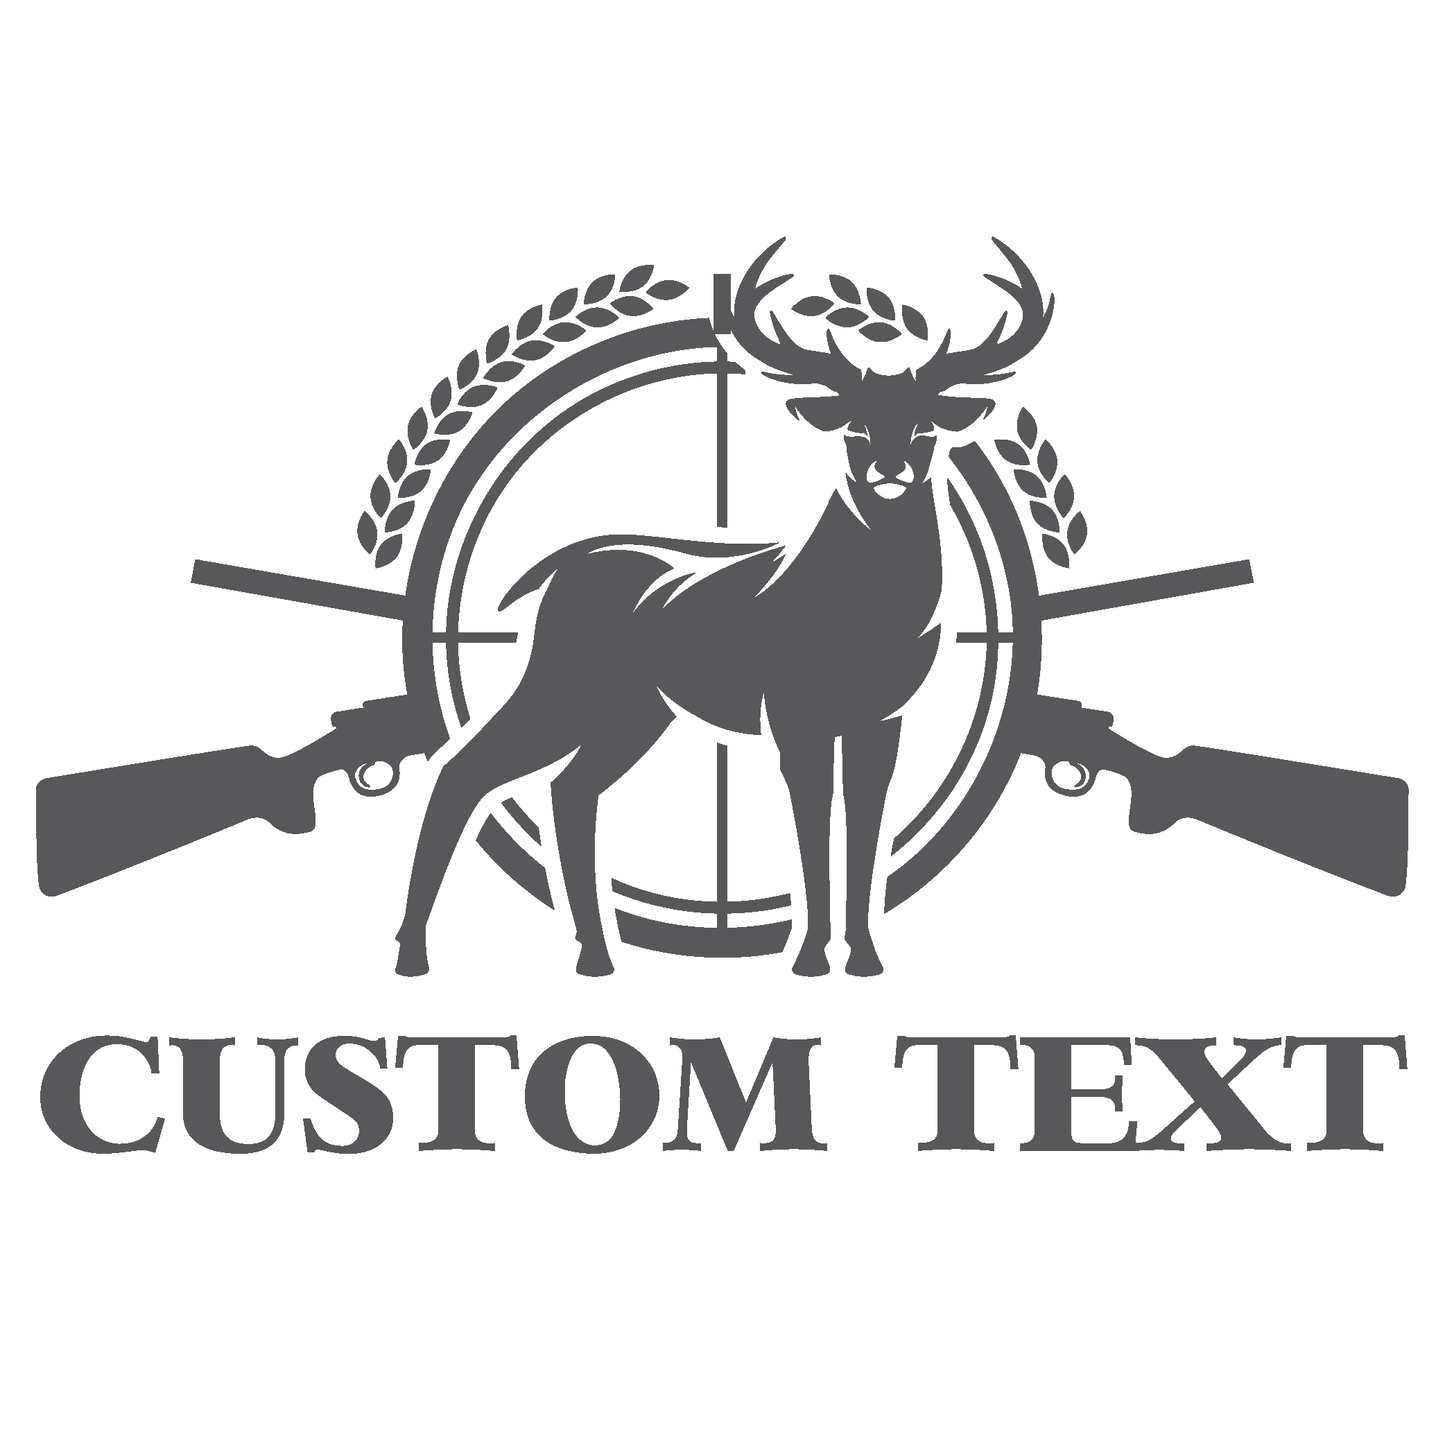 ShopVinylDesignStore.com Buck with Guns Add Your Custom Text Style 002 custom text 1 line Shop Vinyl Design decals stickers